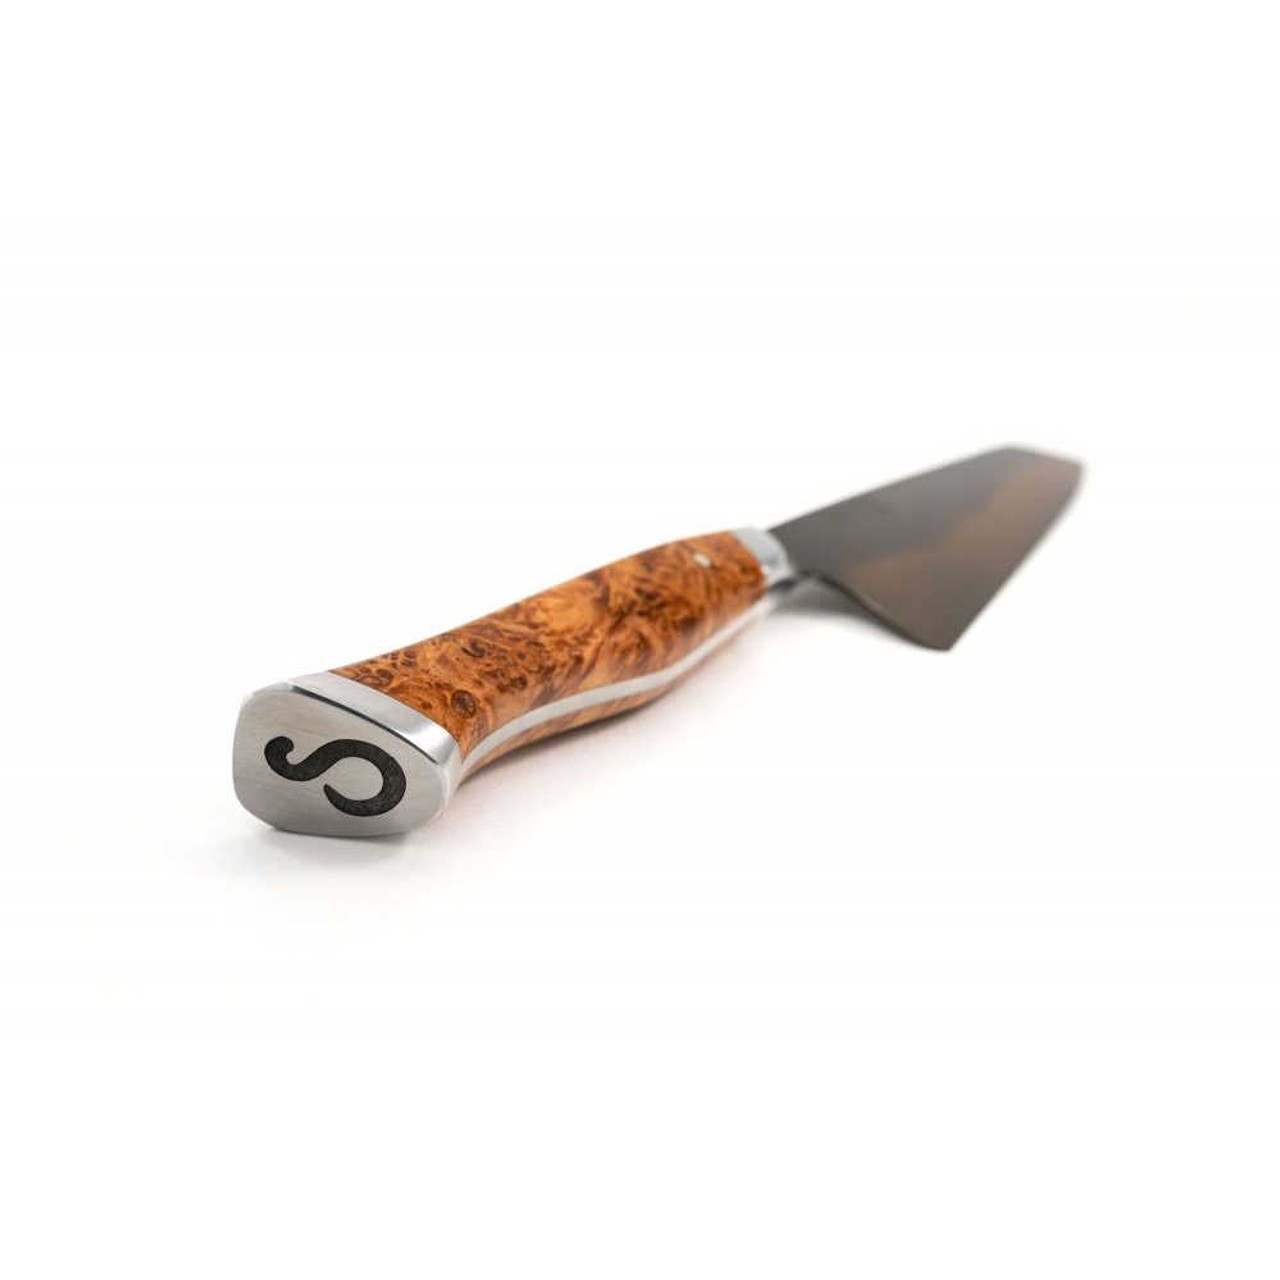 Steelport Carbon Steel Bread Knife with Sheath